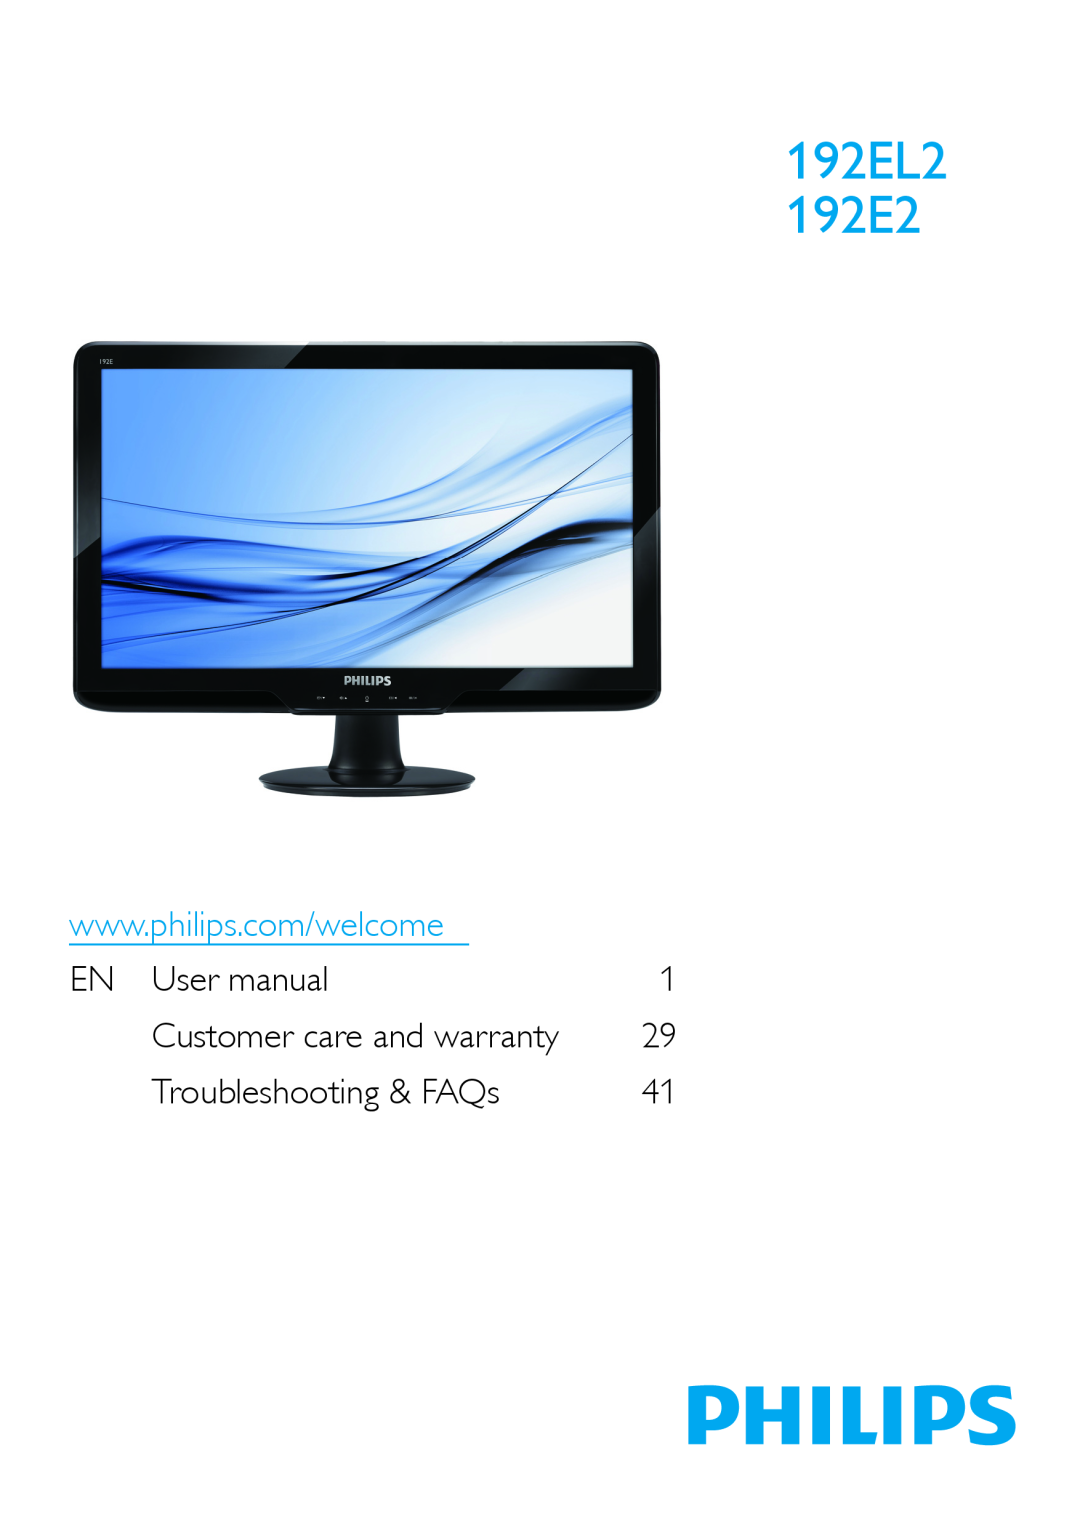 Philips 192EL2SB user manual EN User manual, Troubleshooting & FAQs, 192EL2 192E2, Customer care and warranty 